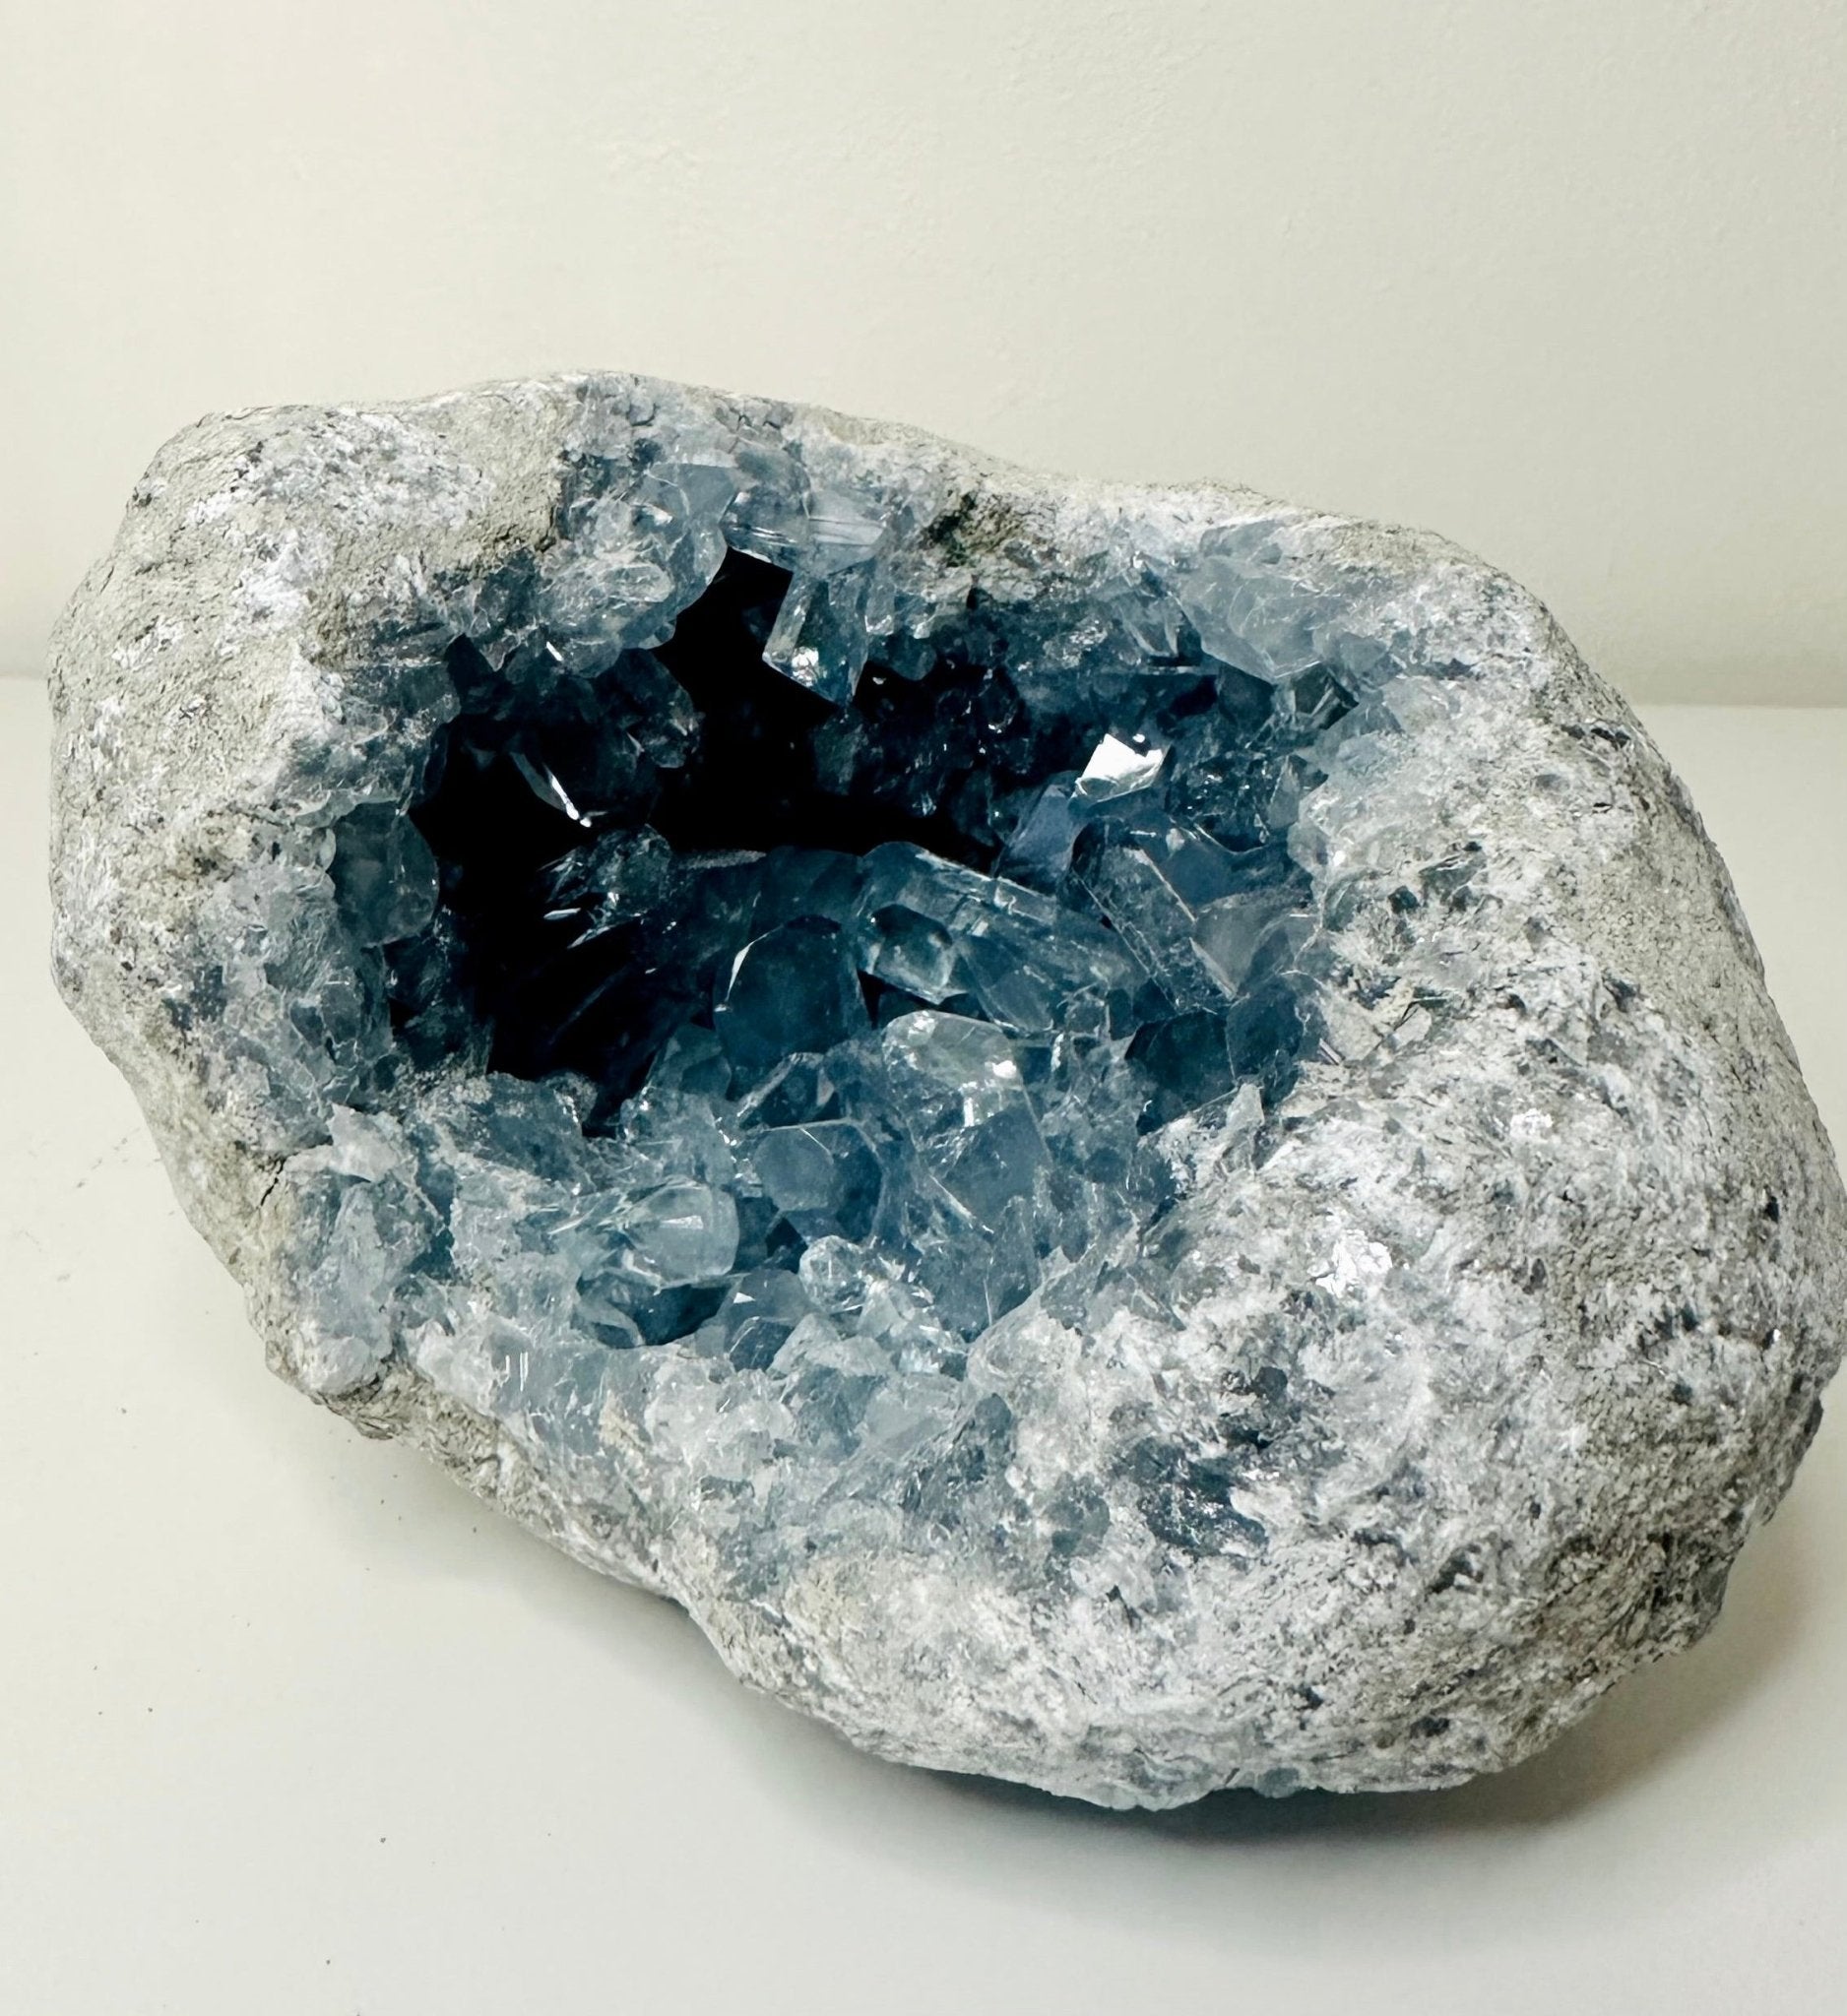 Raw Celestite Cluster - Deep Blue Crystals - Natural Specimen From Madagascar ~7lbs/3.2kg - KREATEUR MIAMI